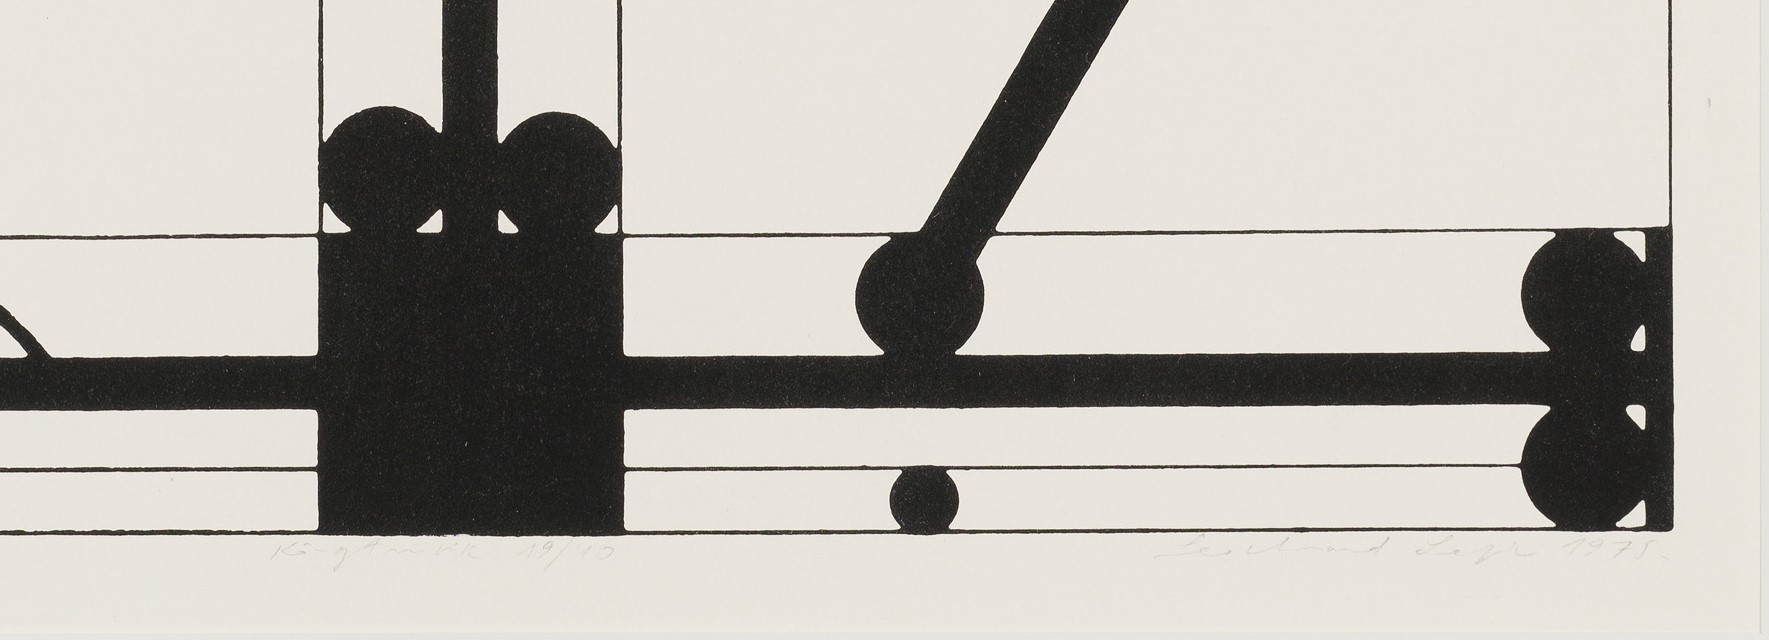 Leonhard Lapin “Masin X”, 1975. Lm 62 x 60 cm.